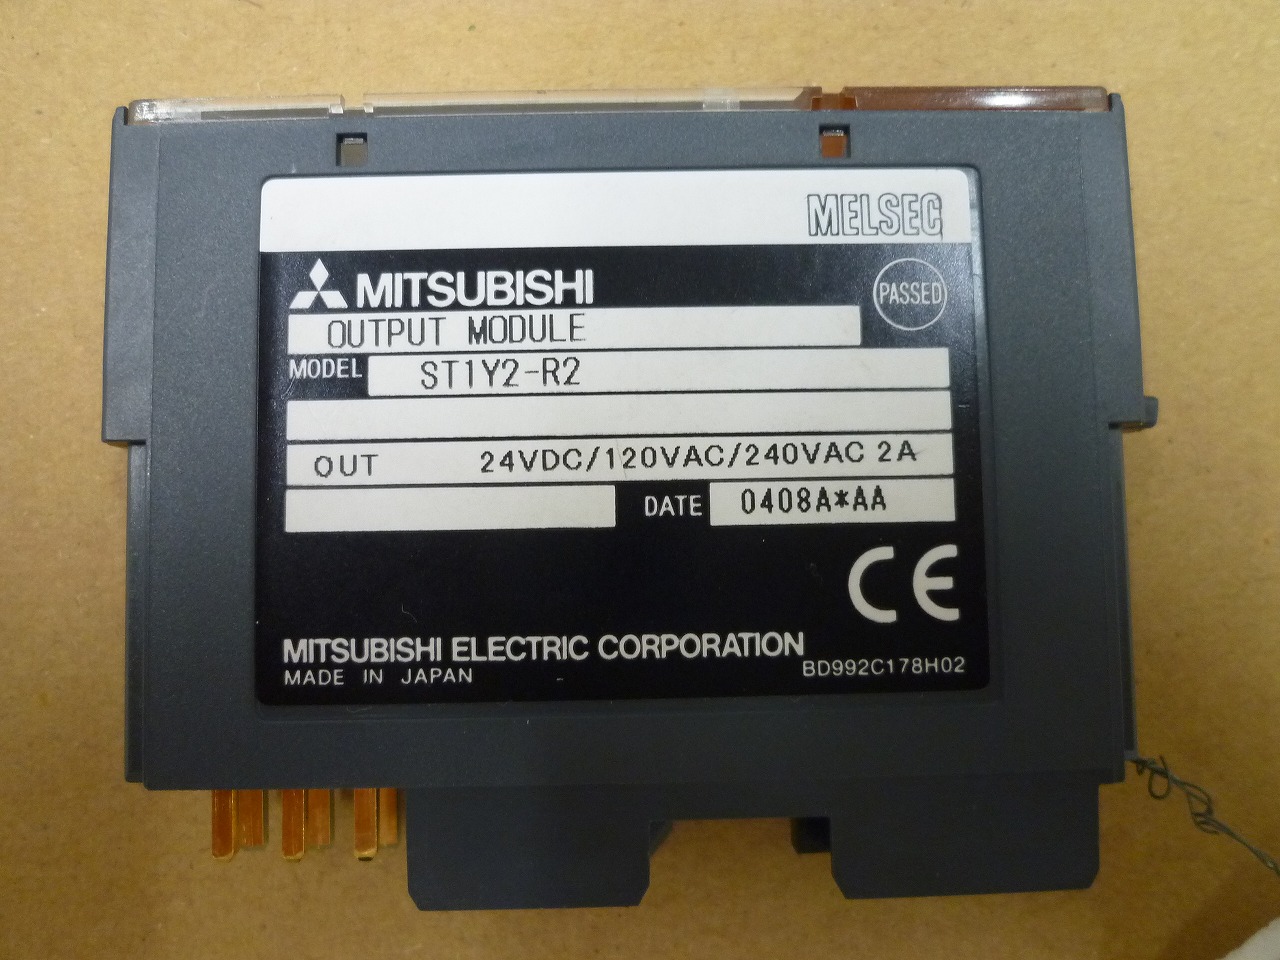 Mitsubishi Output module ST1Y2_R2